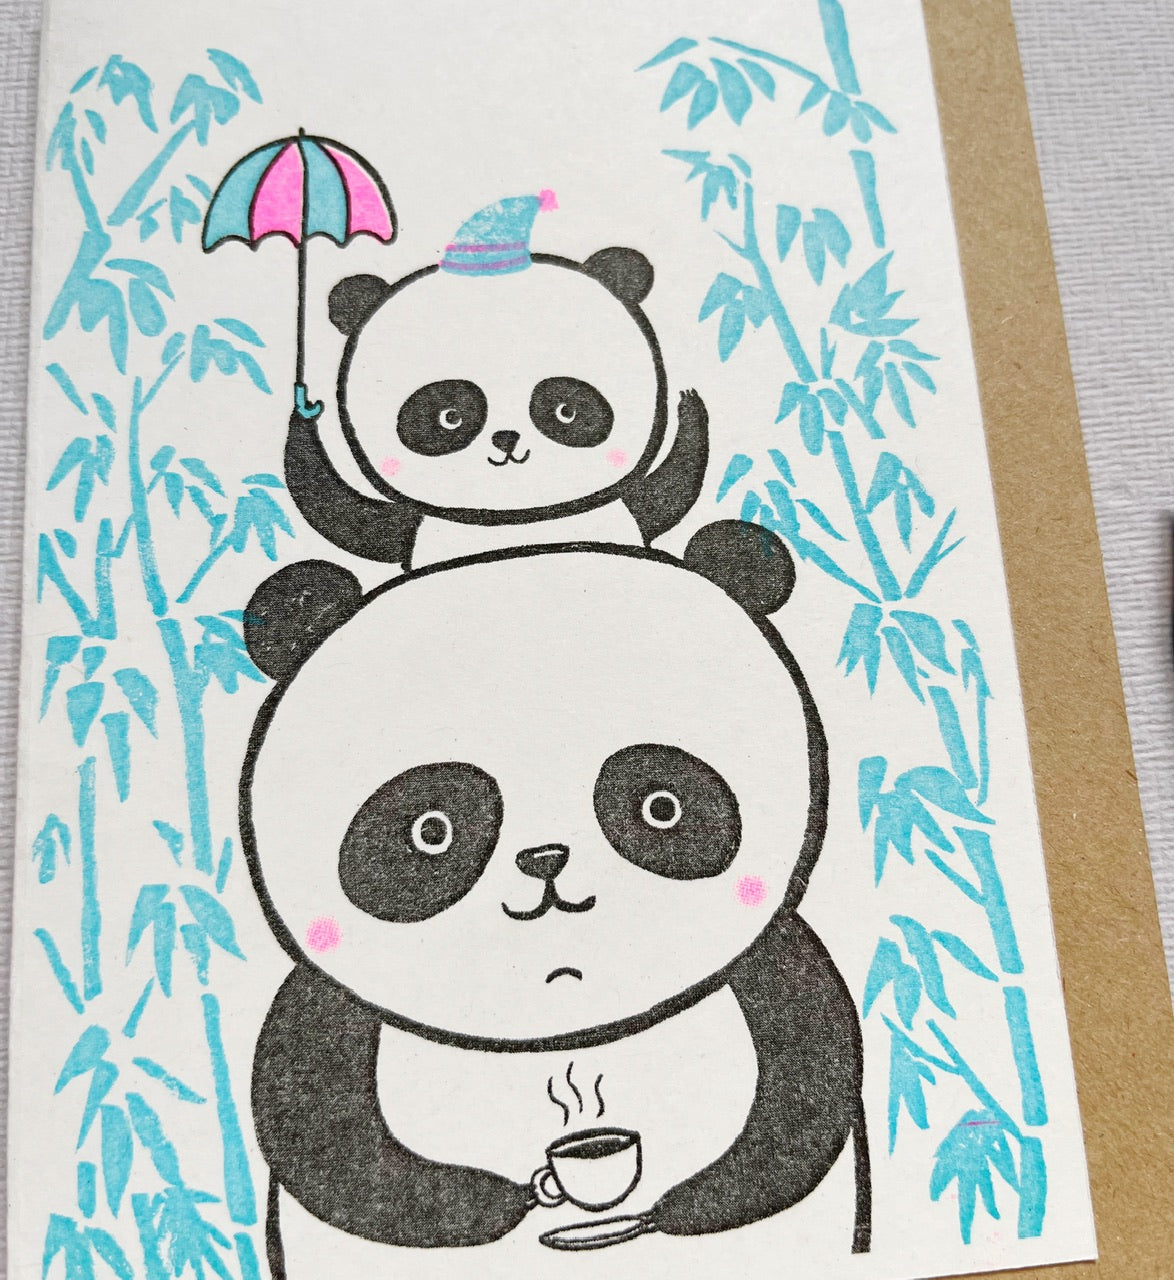 Panda family - A6 risograph card - I Love you, birthday, New baby Card